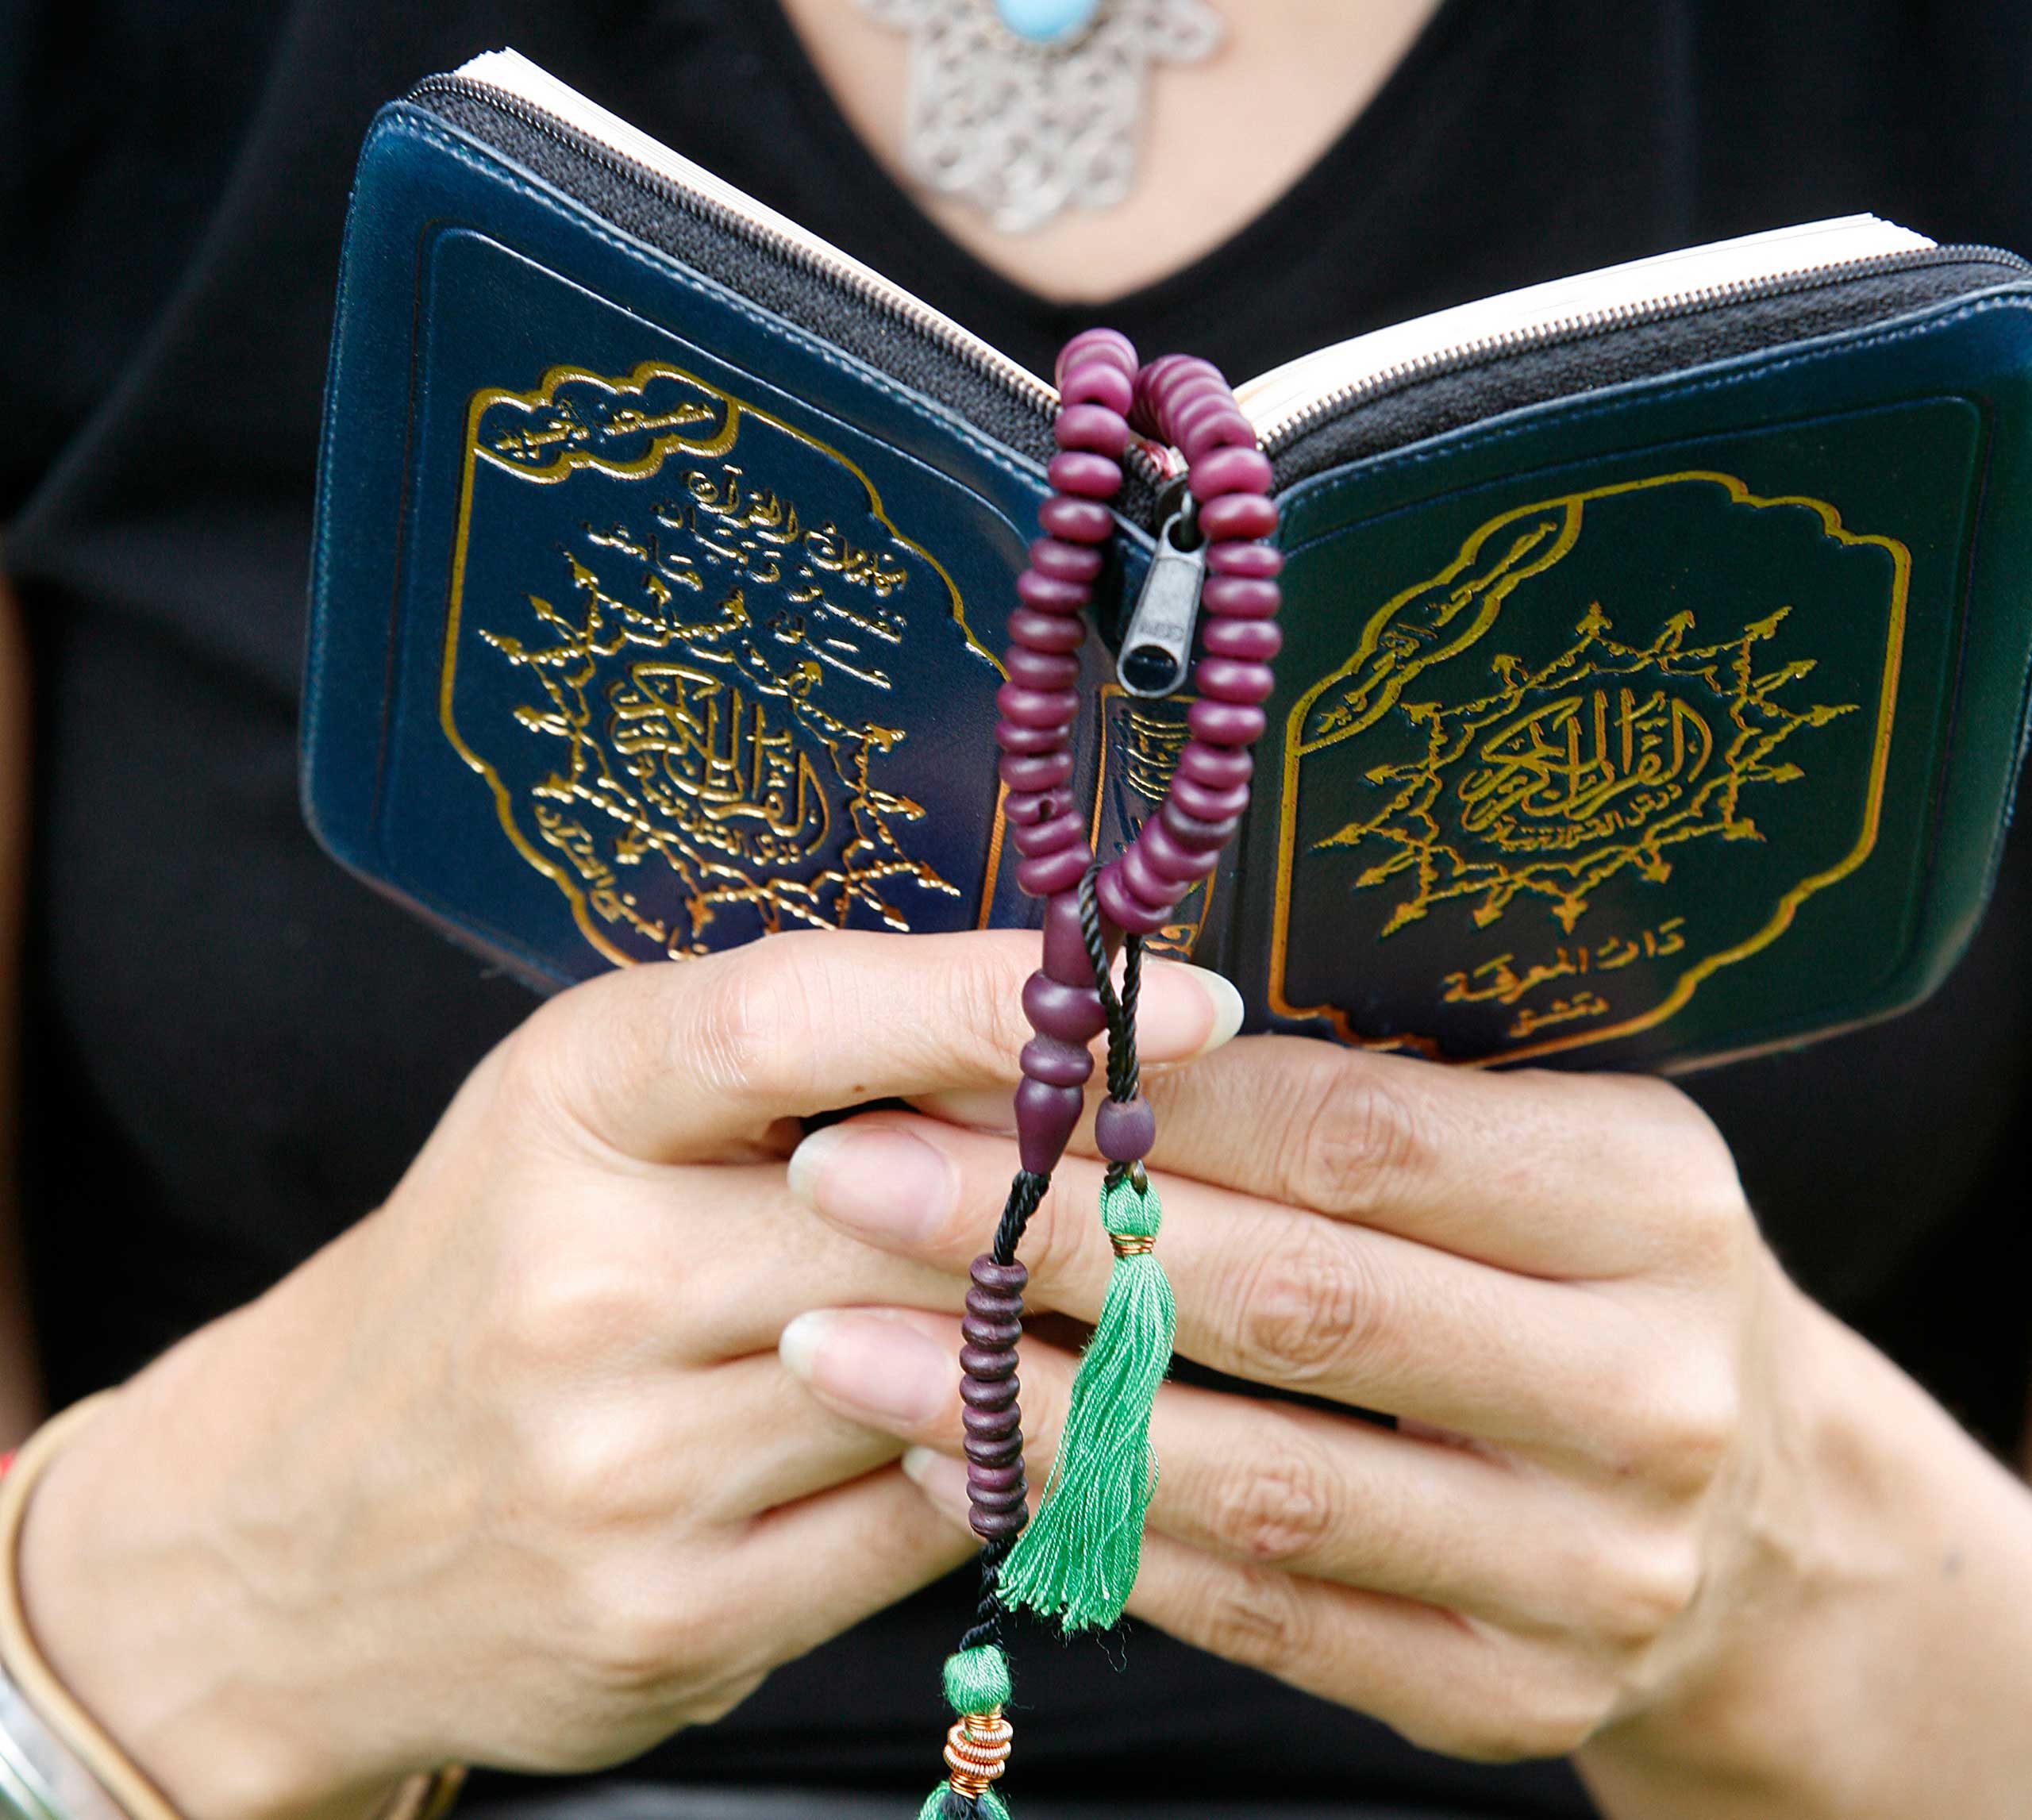 Woman reading the Koran.